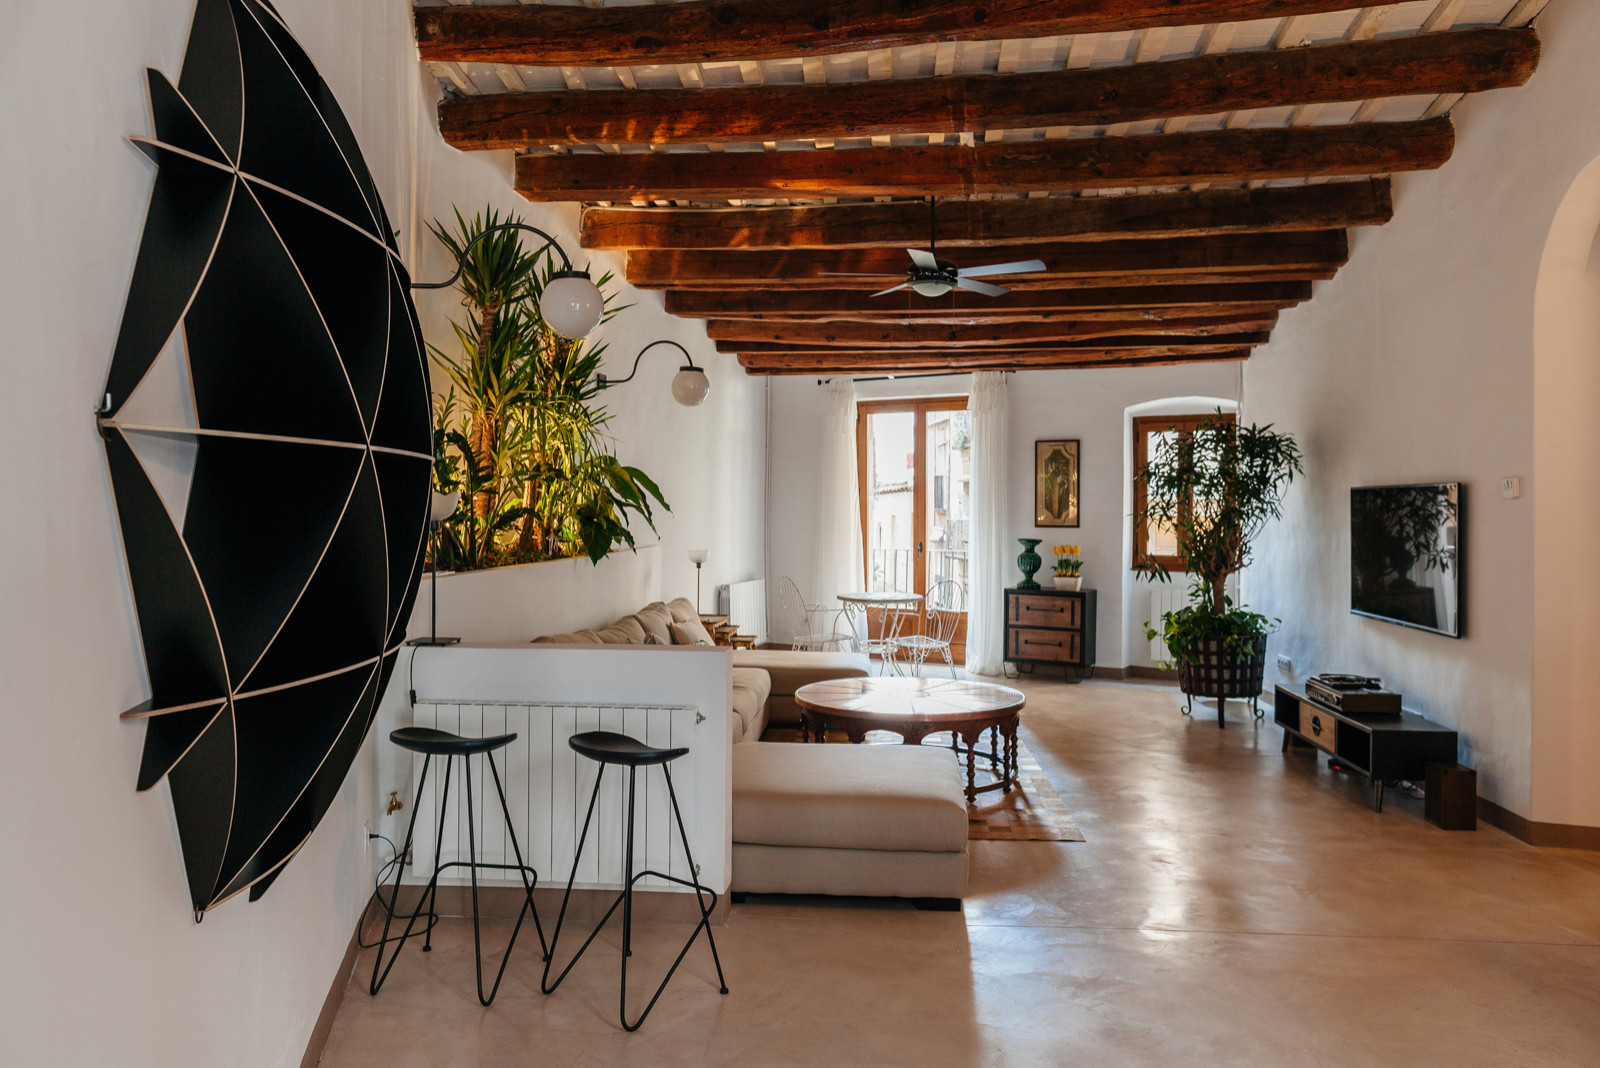 Salón rústico revestido en microcemento$ - Rustic - Living Room - Barcelona  - by FUTURCRET | Houzz